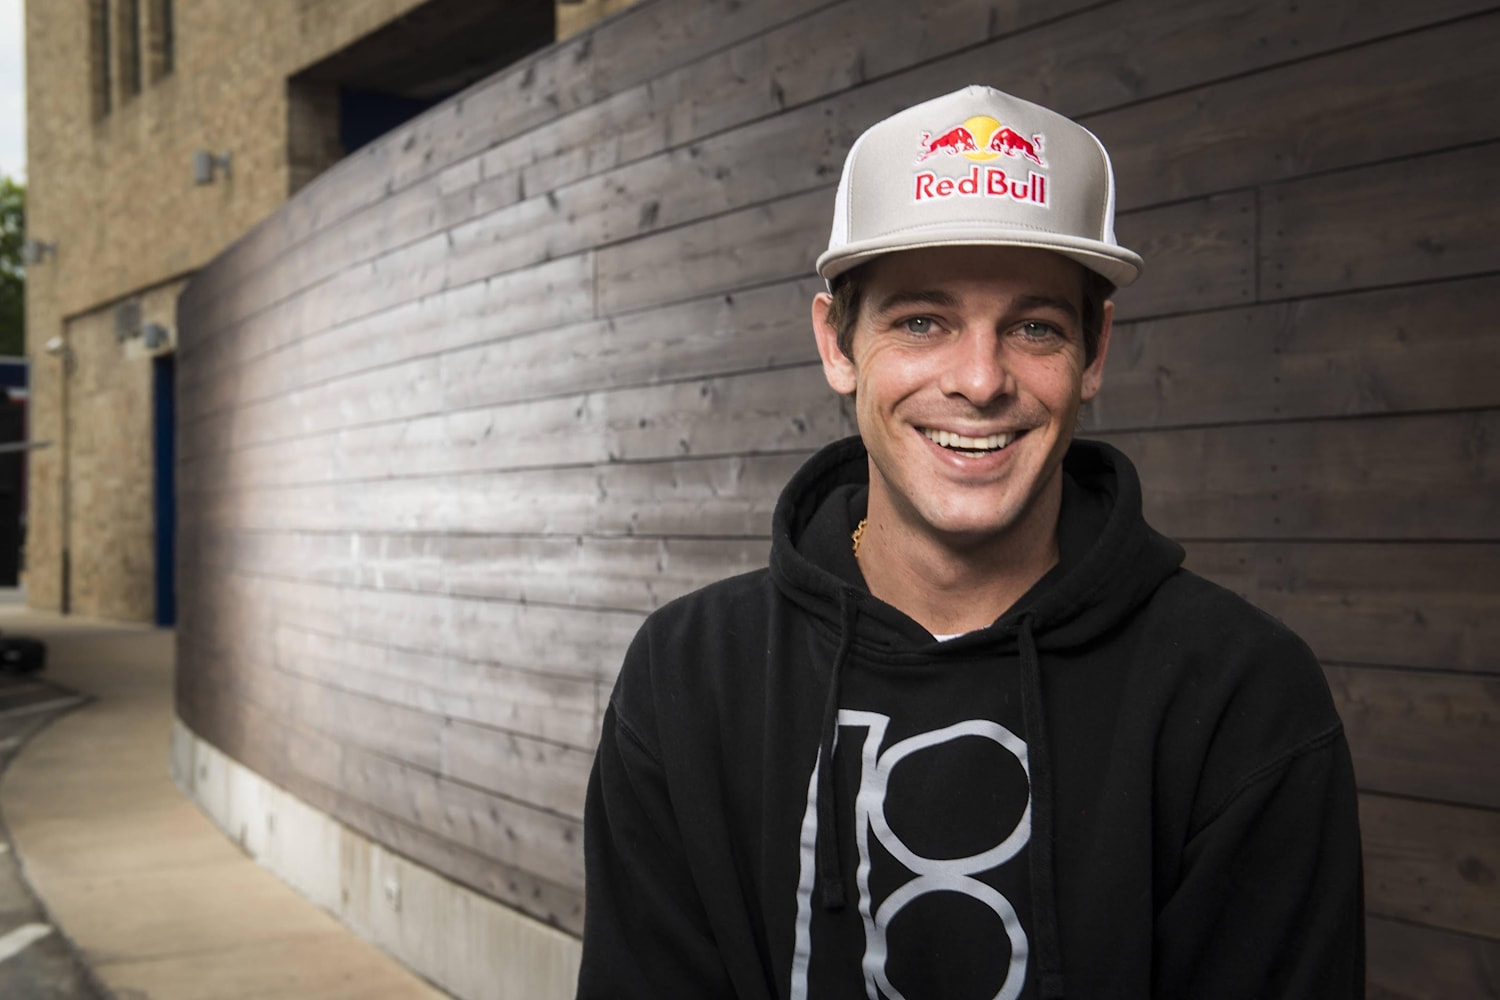 Ryan Sheckler Skateboarder's Red Bull Wingfinder test